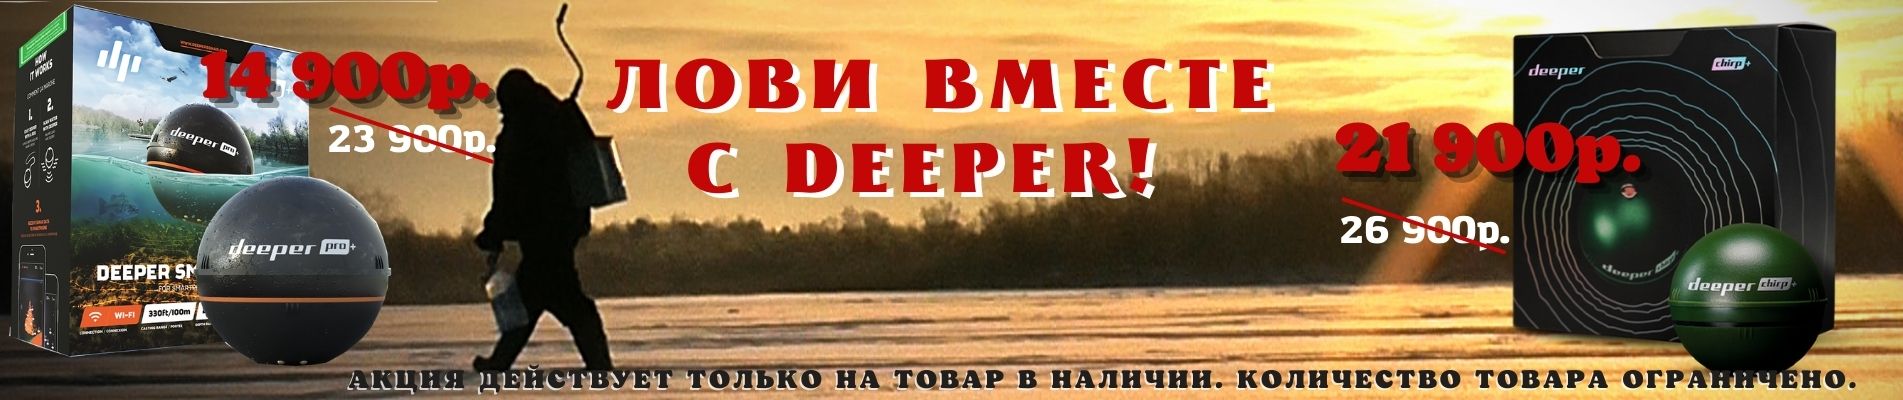 deeper_akciya_11.21